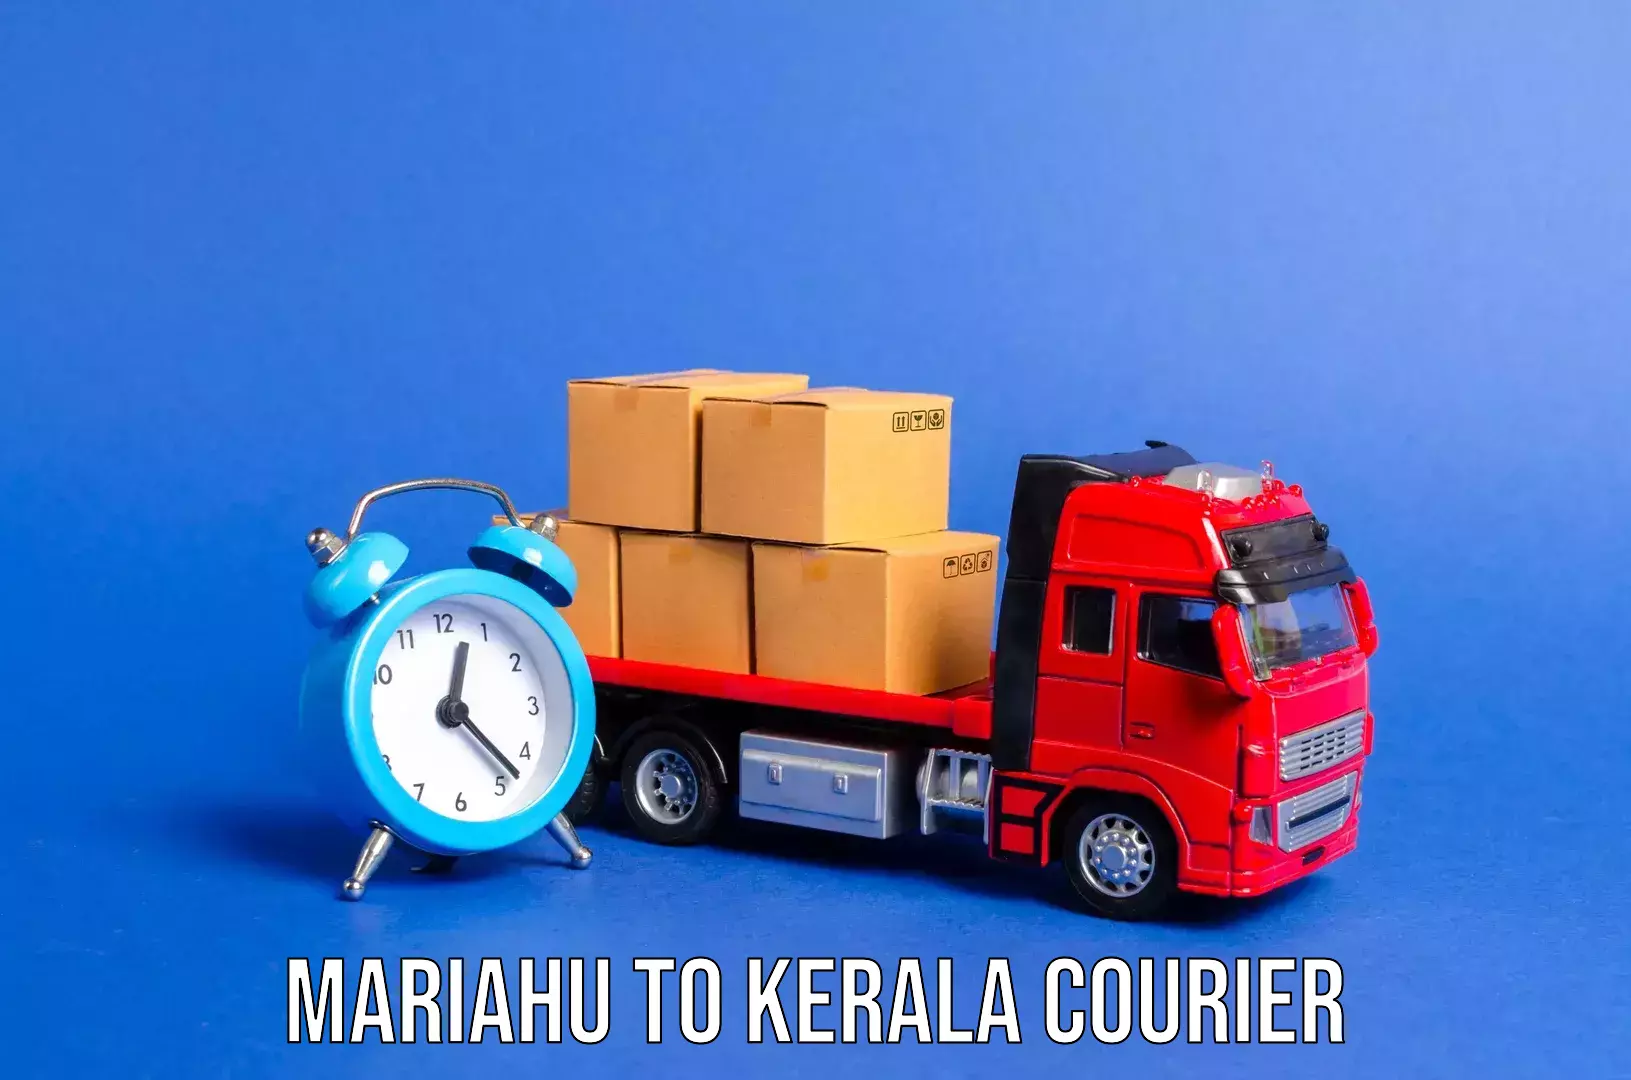 Baggage relocation service Mariahu to Kerala